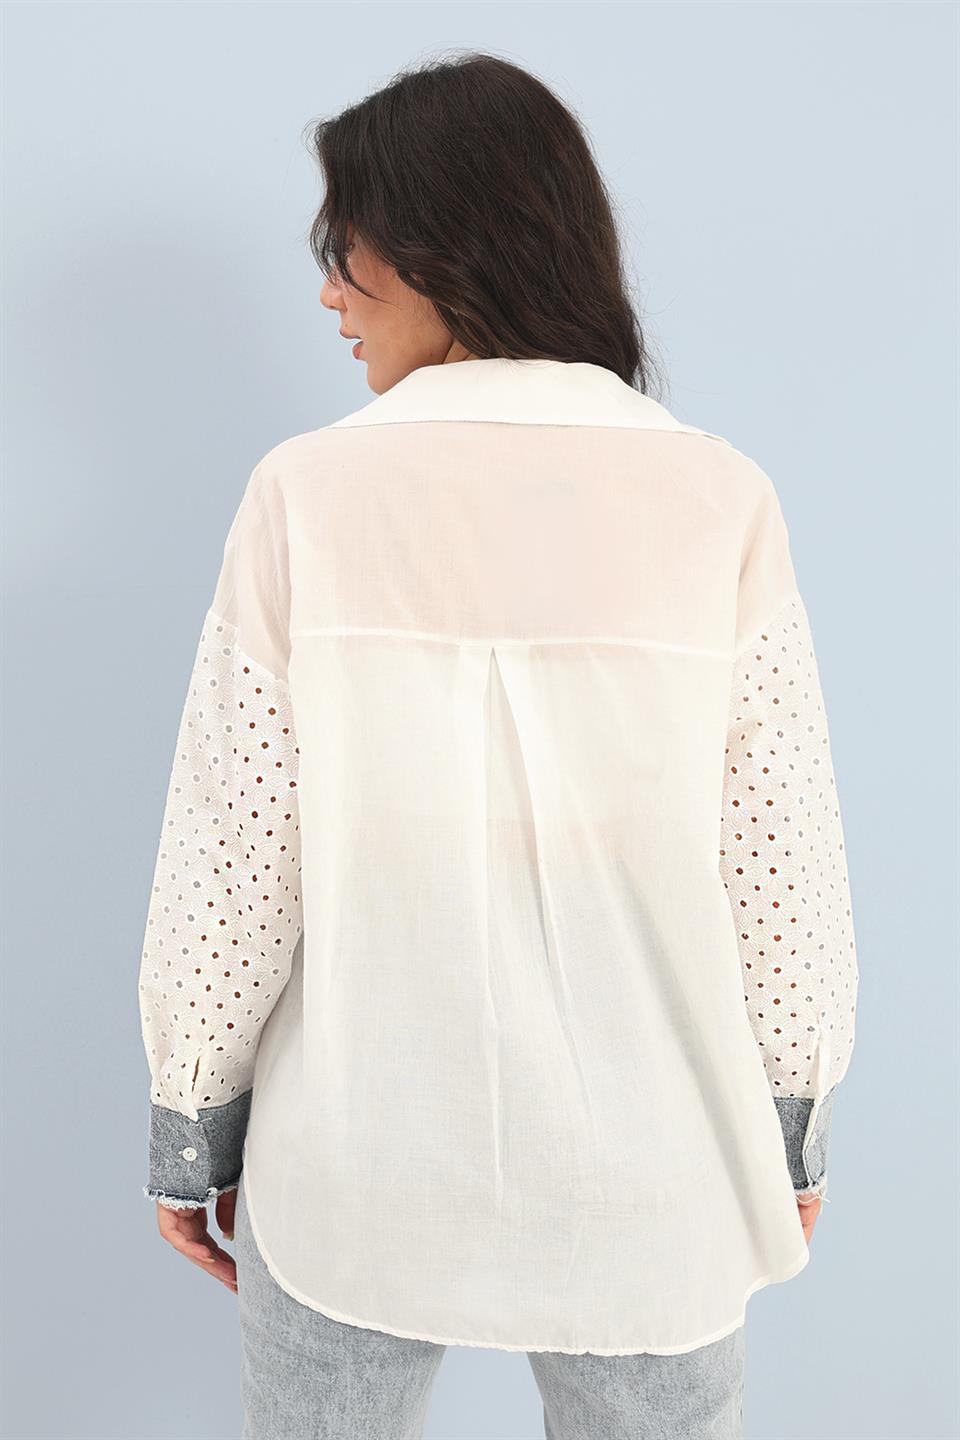 Women's Shirt Embroidered Denim Garnish Floral Pattern - White - STREETMODE™